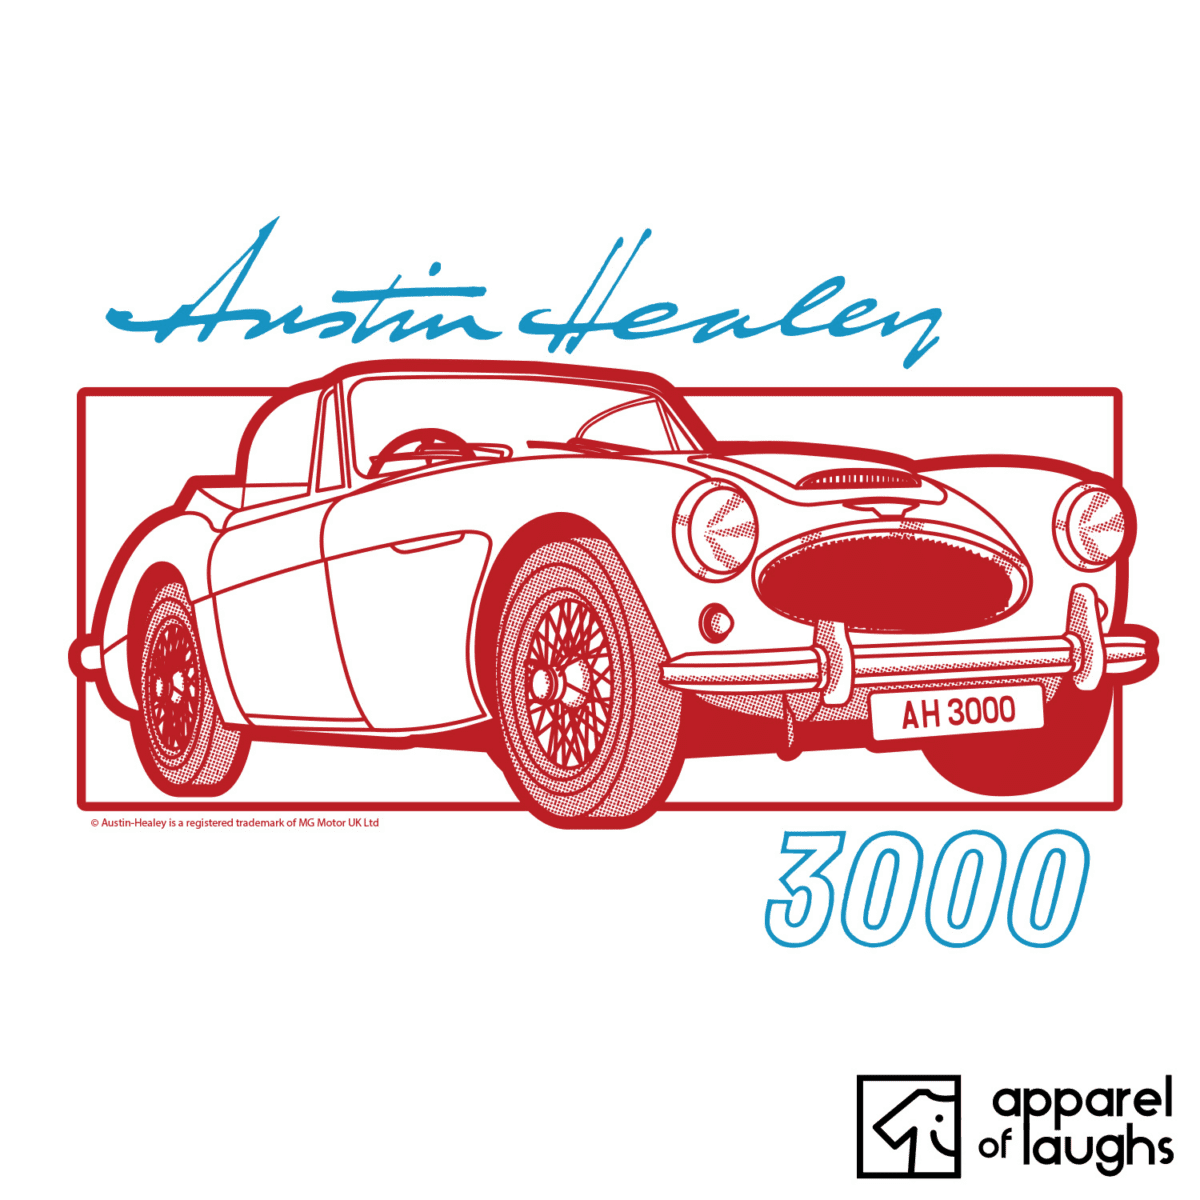 Austin Healey 3000 Car Brand Vintage Retro British Leyland Motoring Automotive T-Shirt Design White